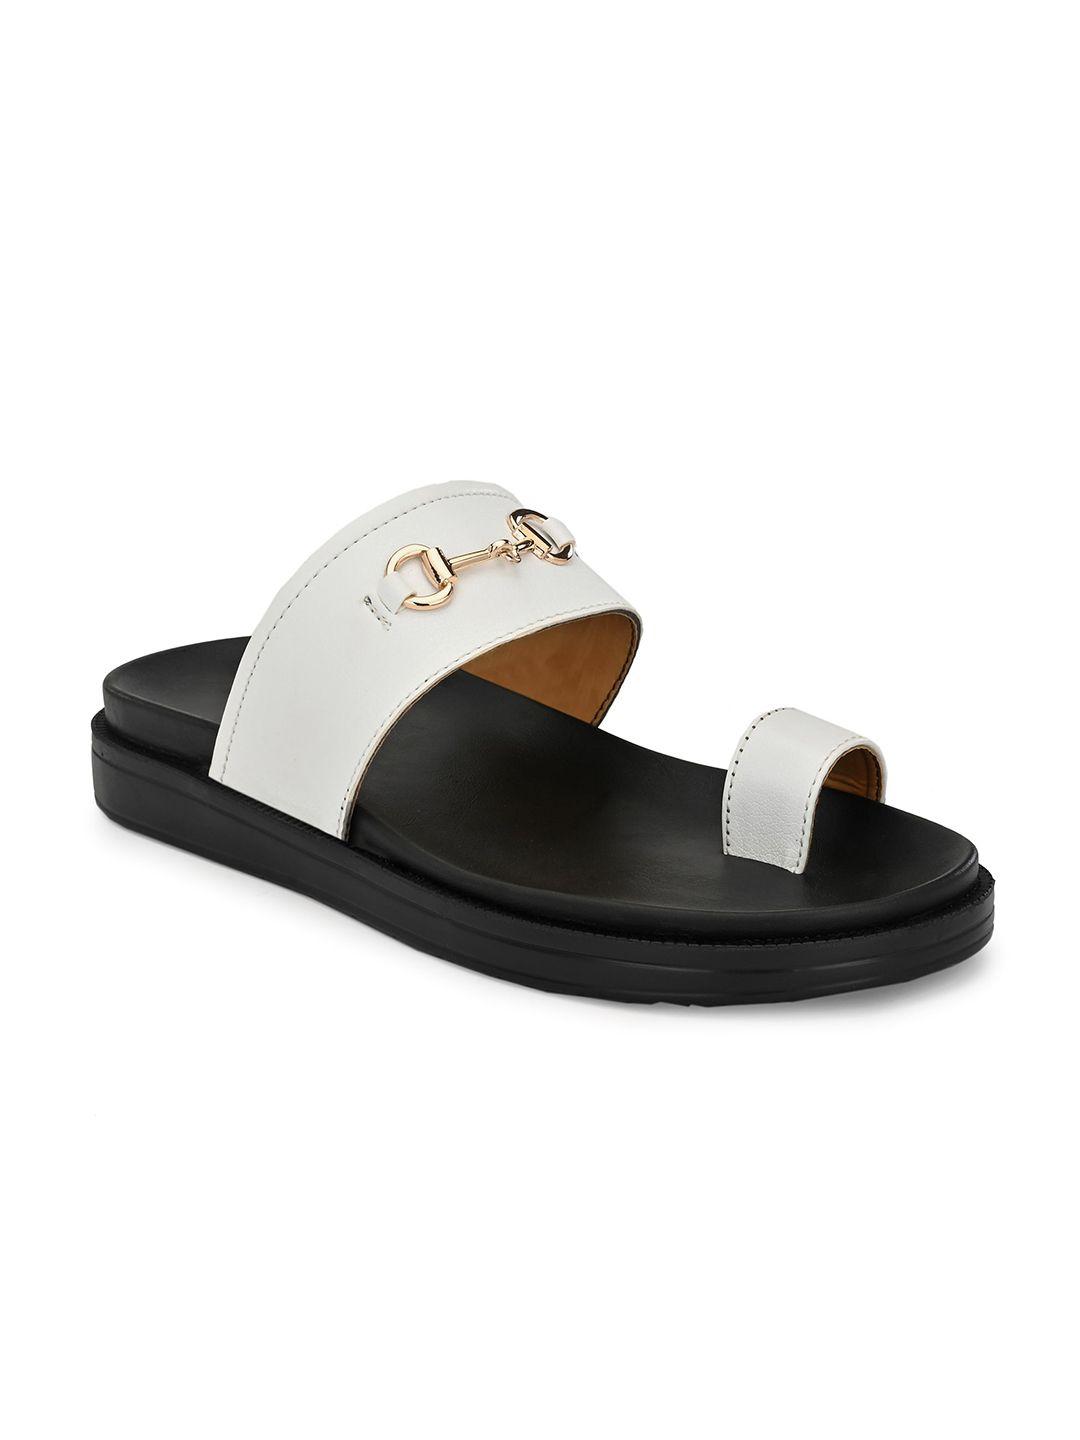 eego italy men white & black comfort sandals